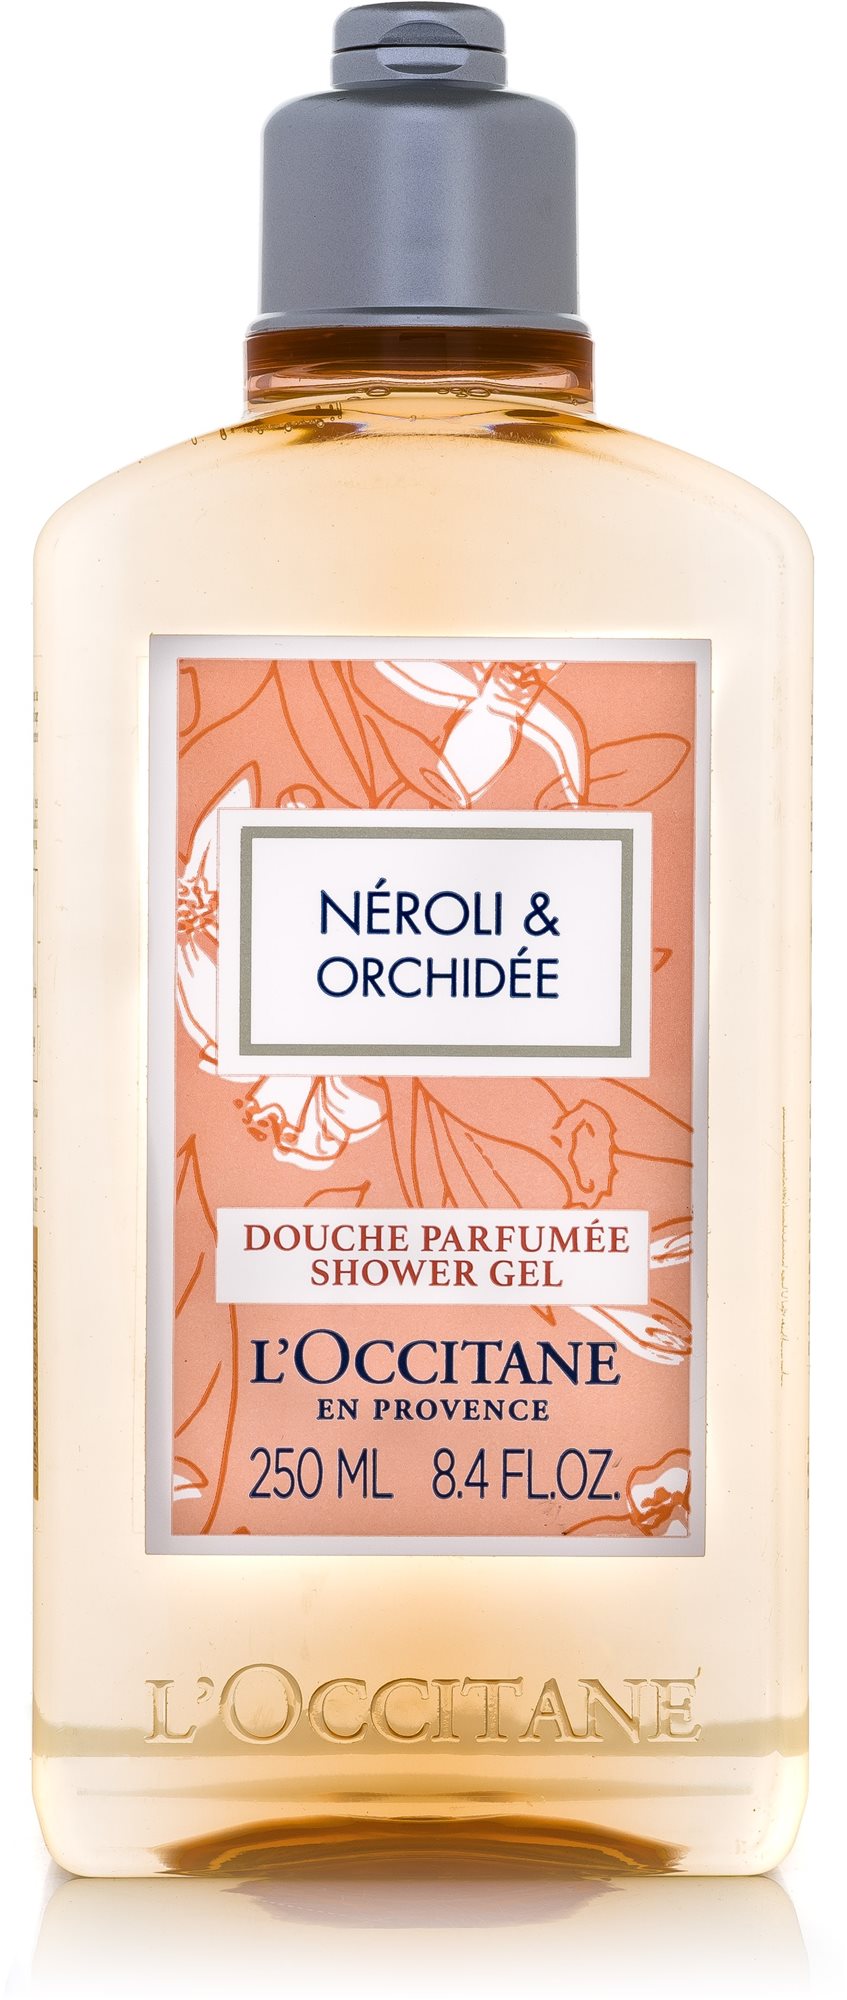 L'OCCITANE Néroli & Orchidée Shower Gel 250 ml